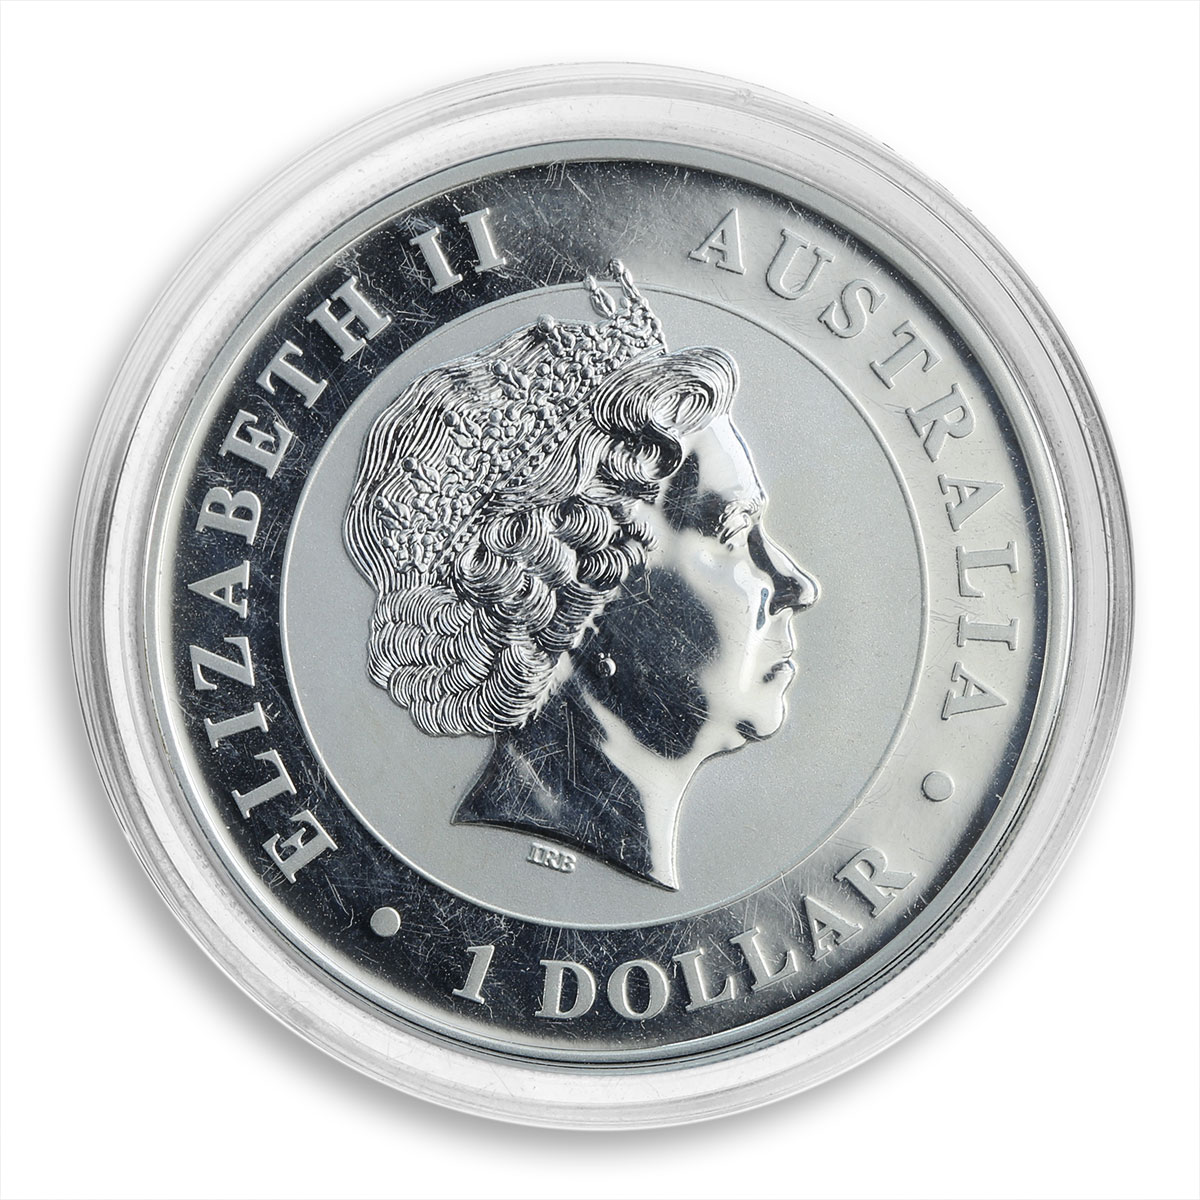 Australia 1 dollar Australian Kookaburra bird silver coin 2011